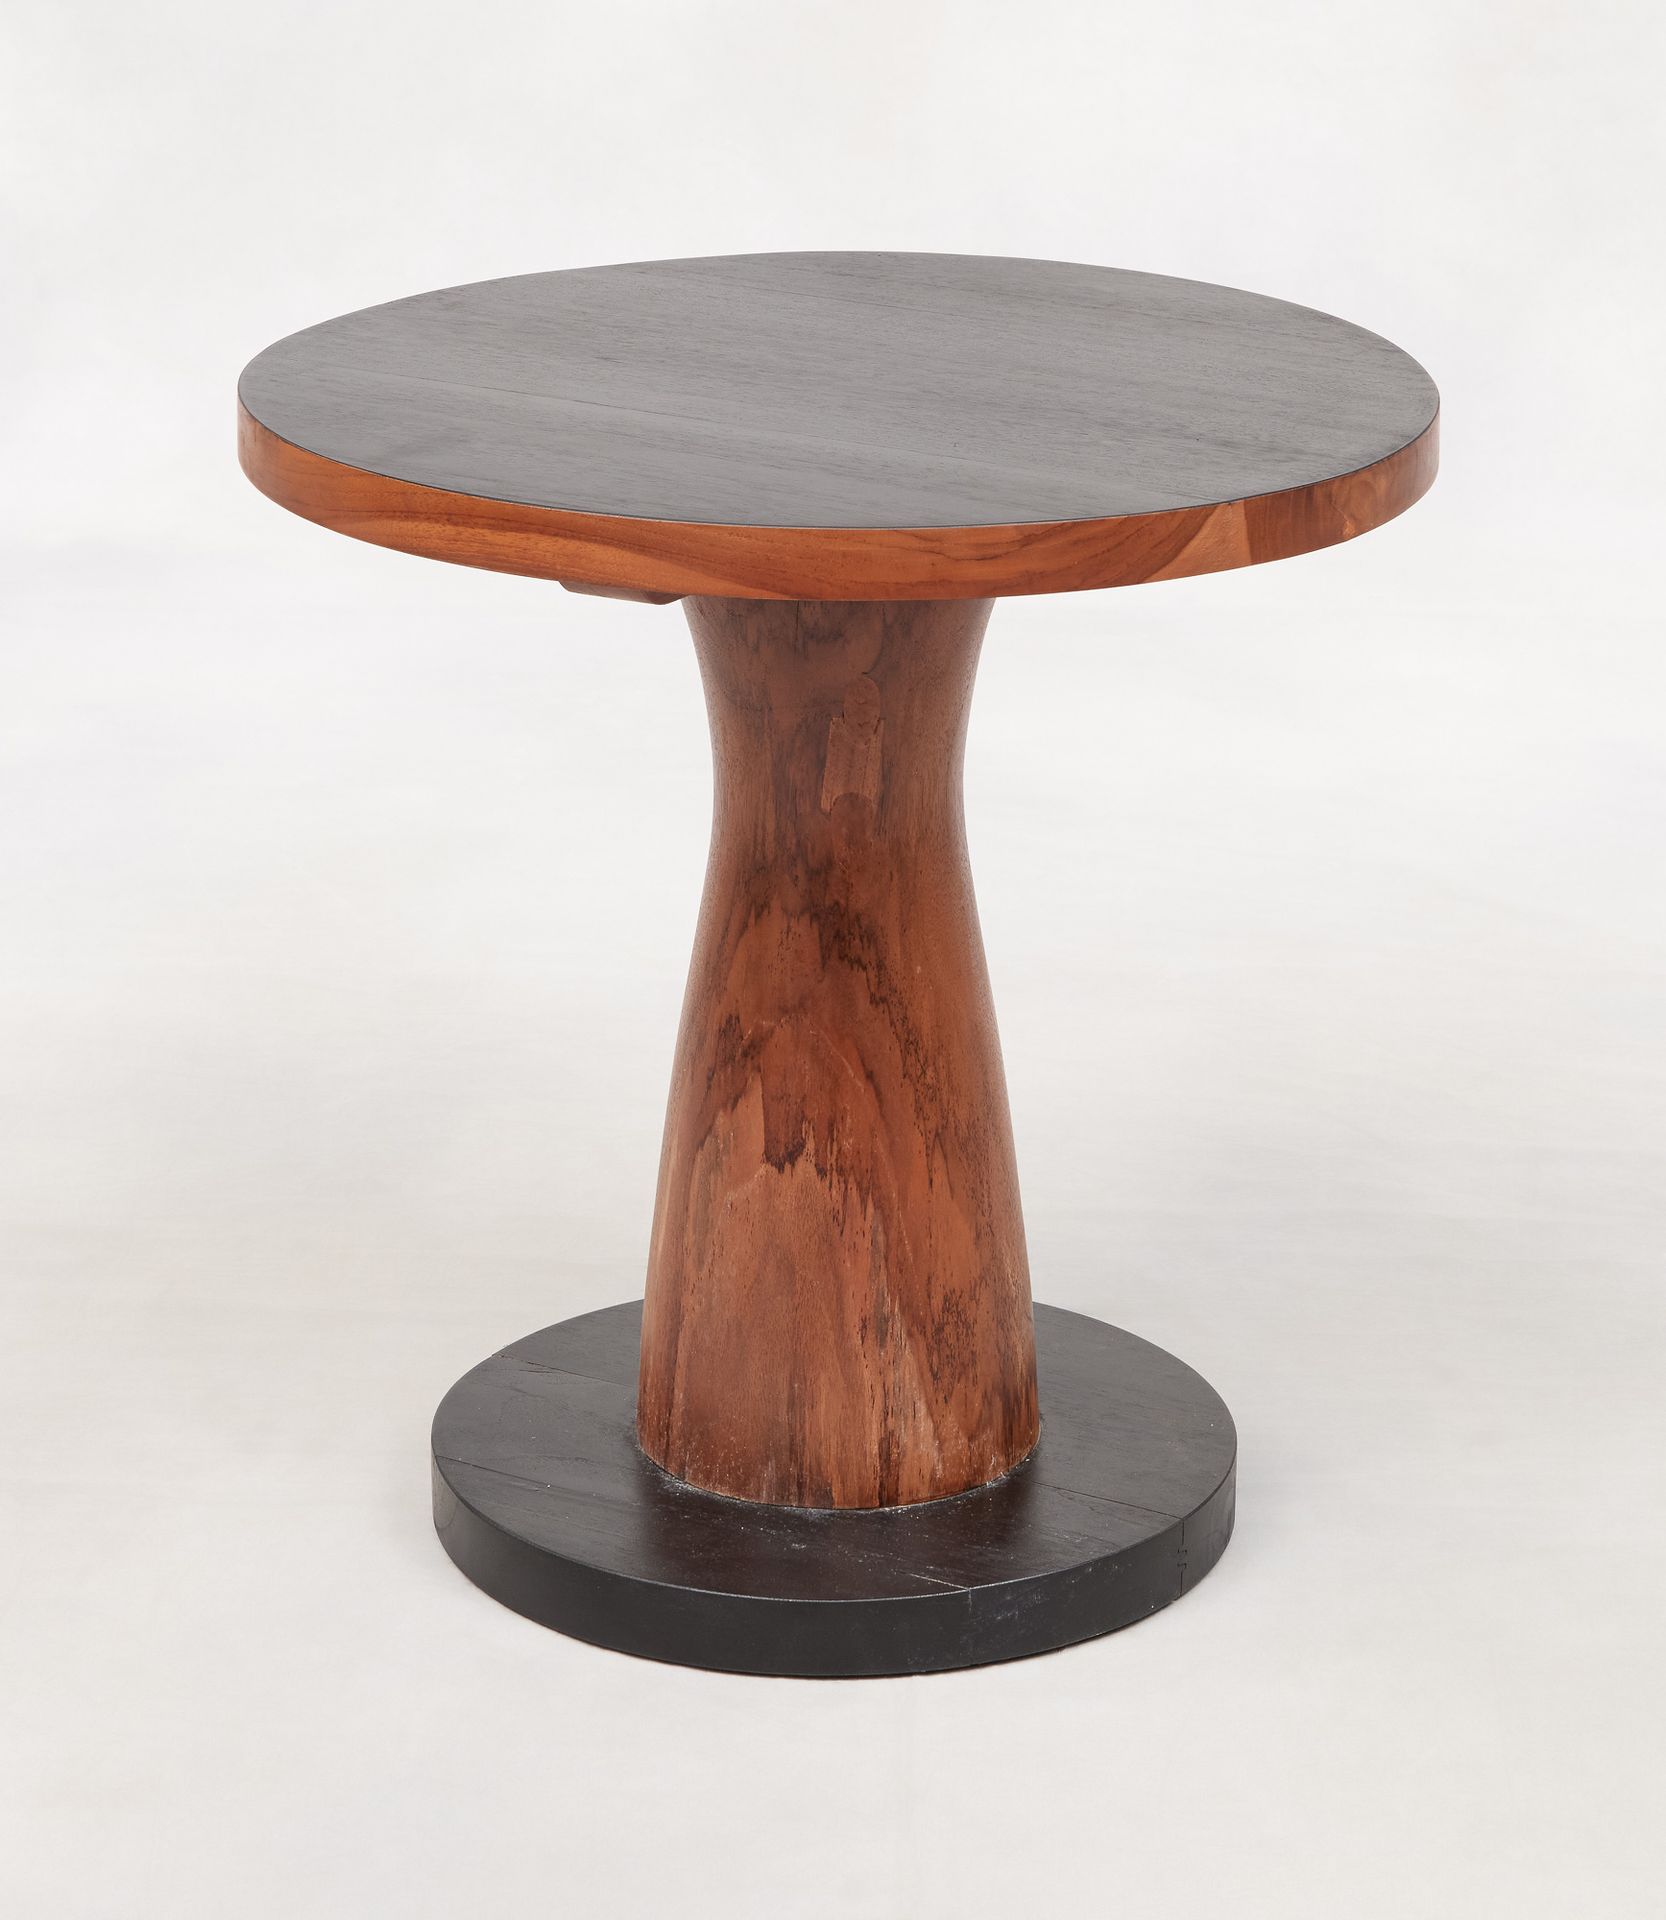 Olivier DE SCHRIJVER École belge (1958). 家具：带圆形桌面的木质边桌，型号为 "Colorado"。

签名：9/240&hellip;